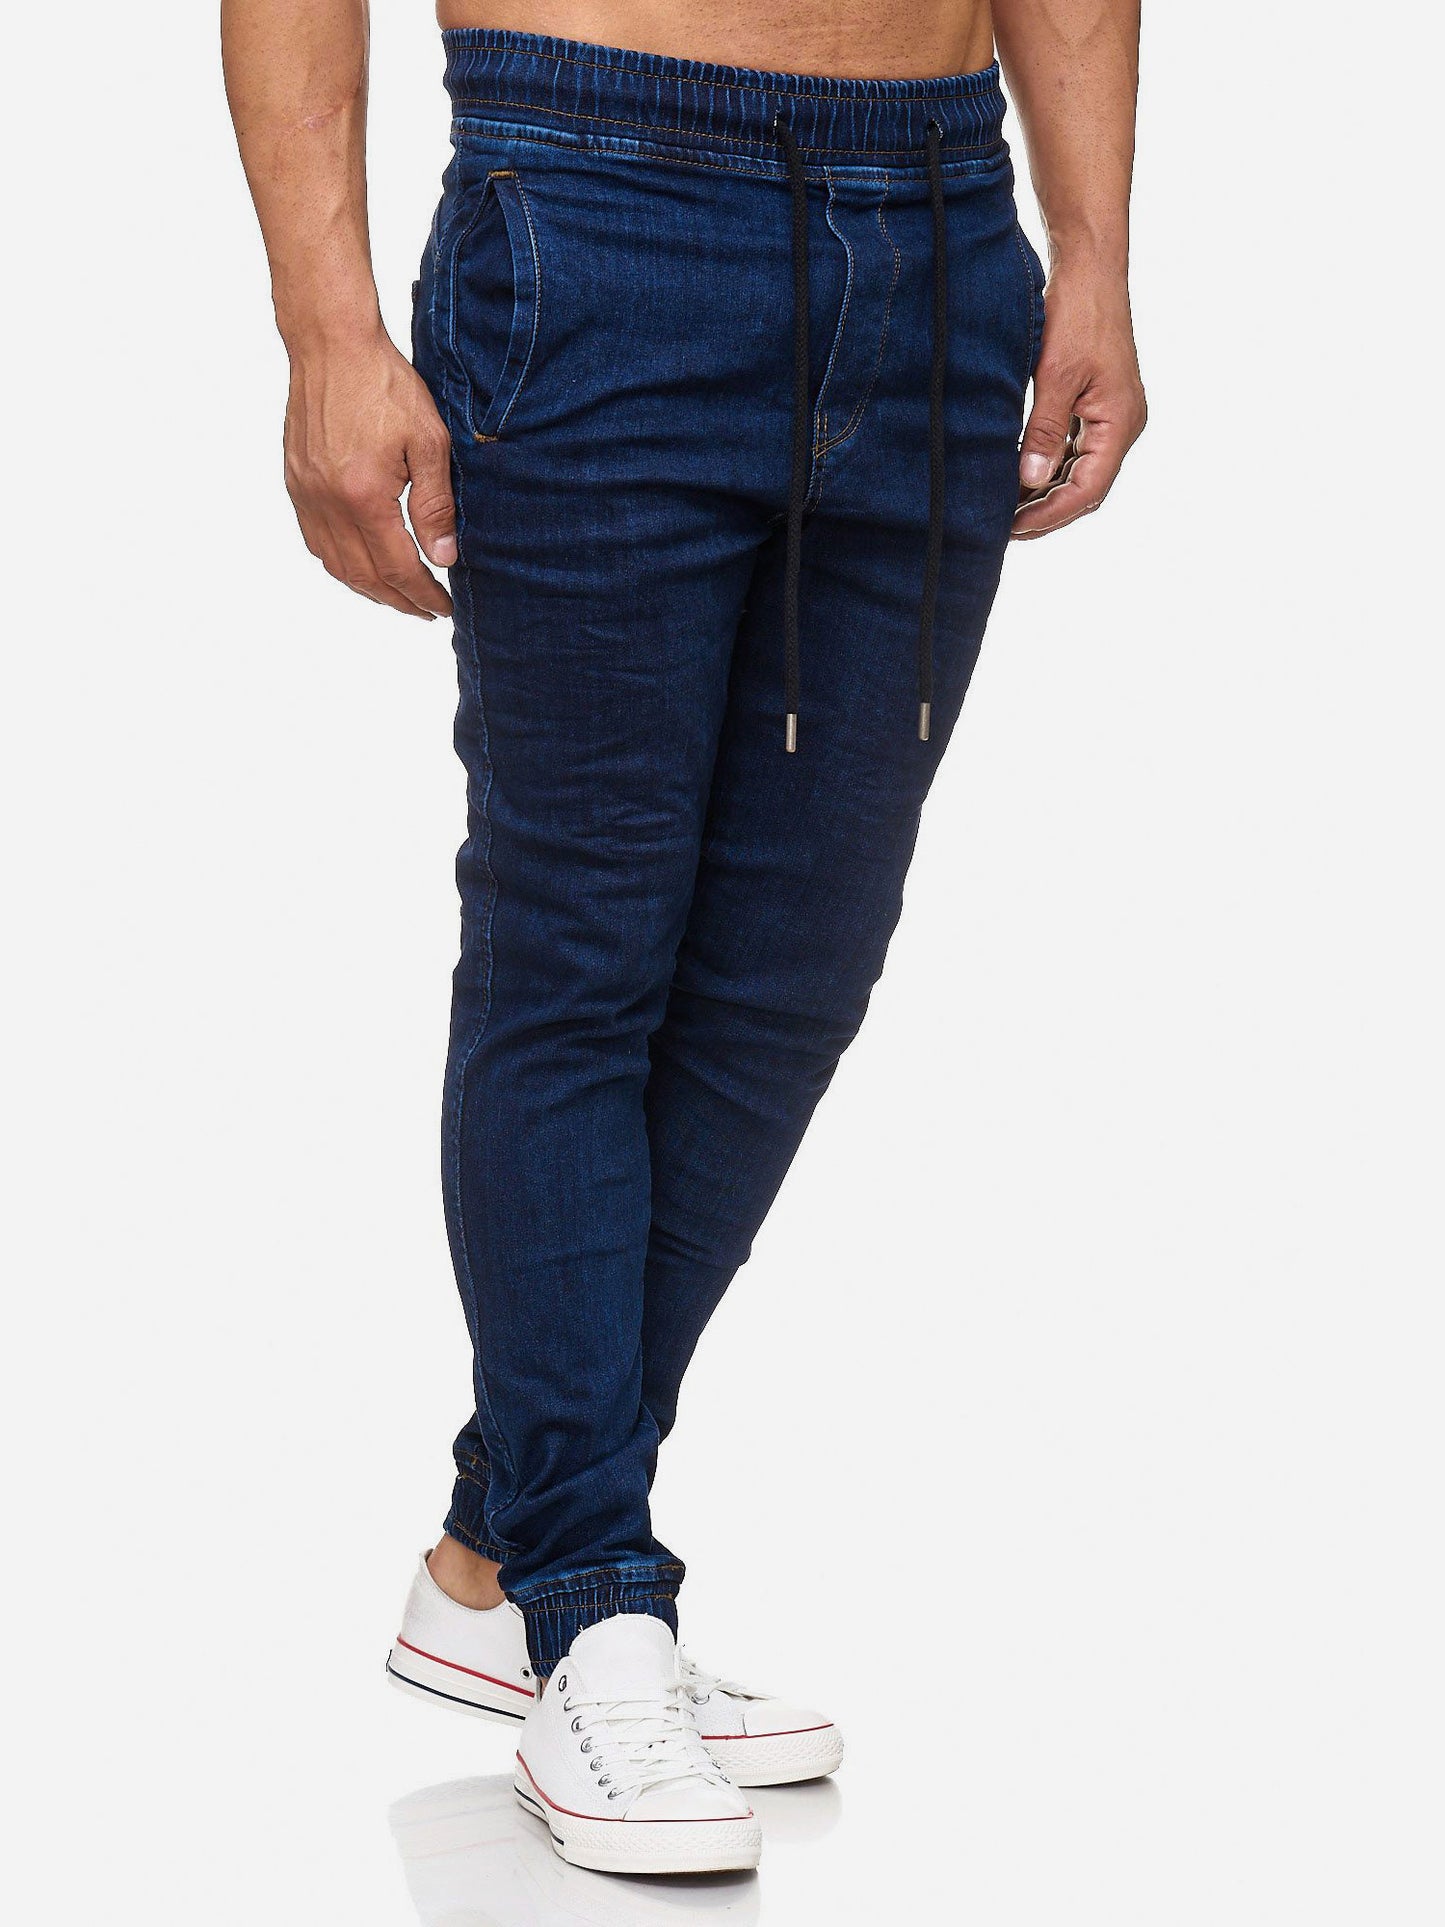 Tazzio Jeans Regular Fit style jogger pour hommes 17504